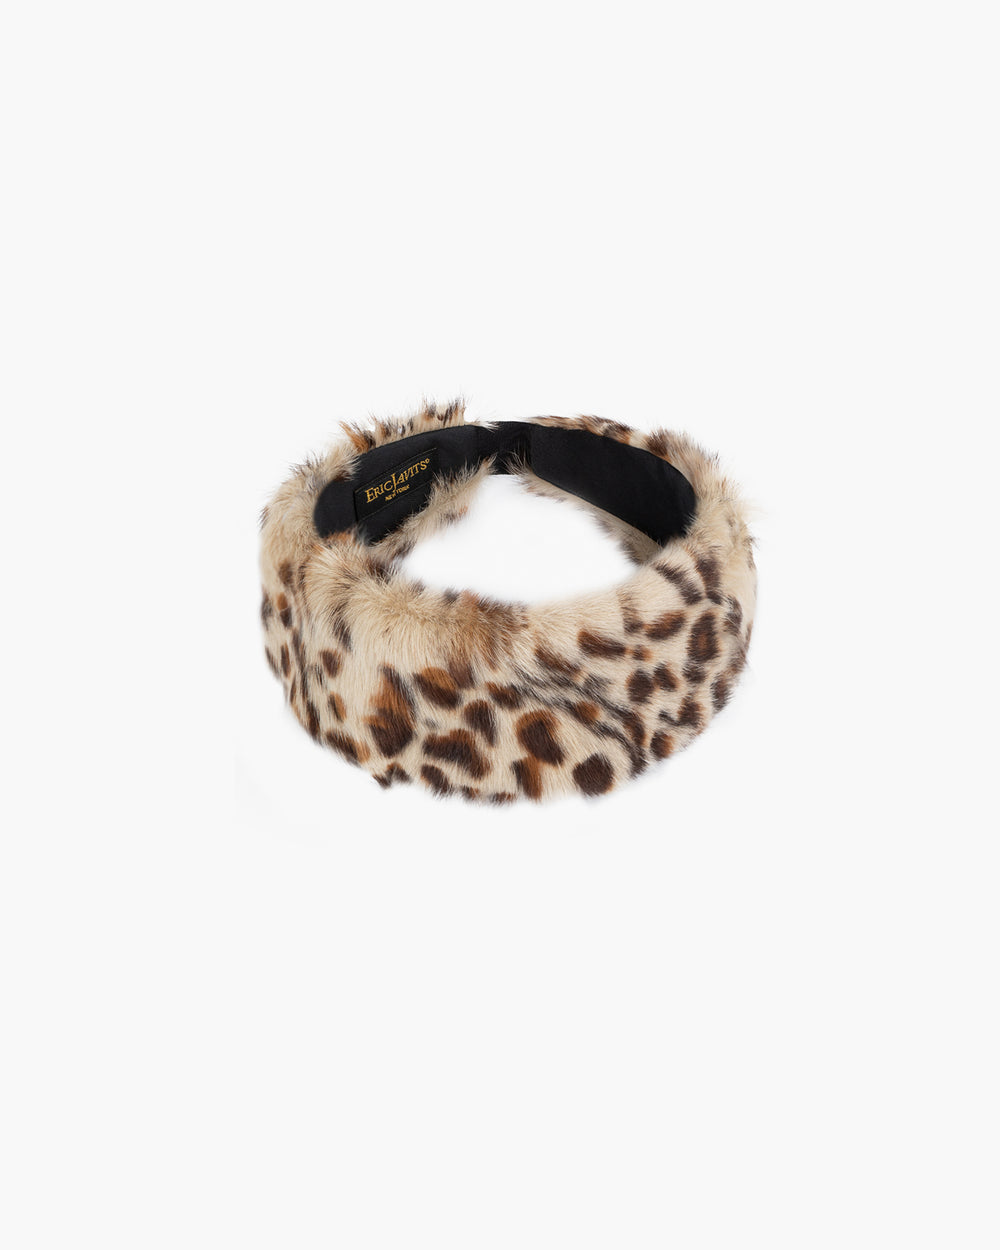 Jag Headband｜Natural Fur｜Designer's Headpiece | Eric Javits | Eric Javits